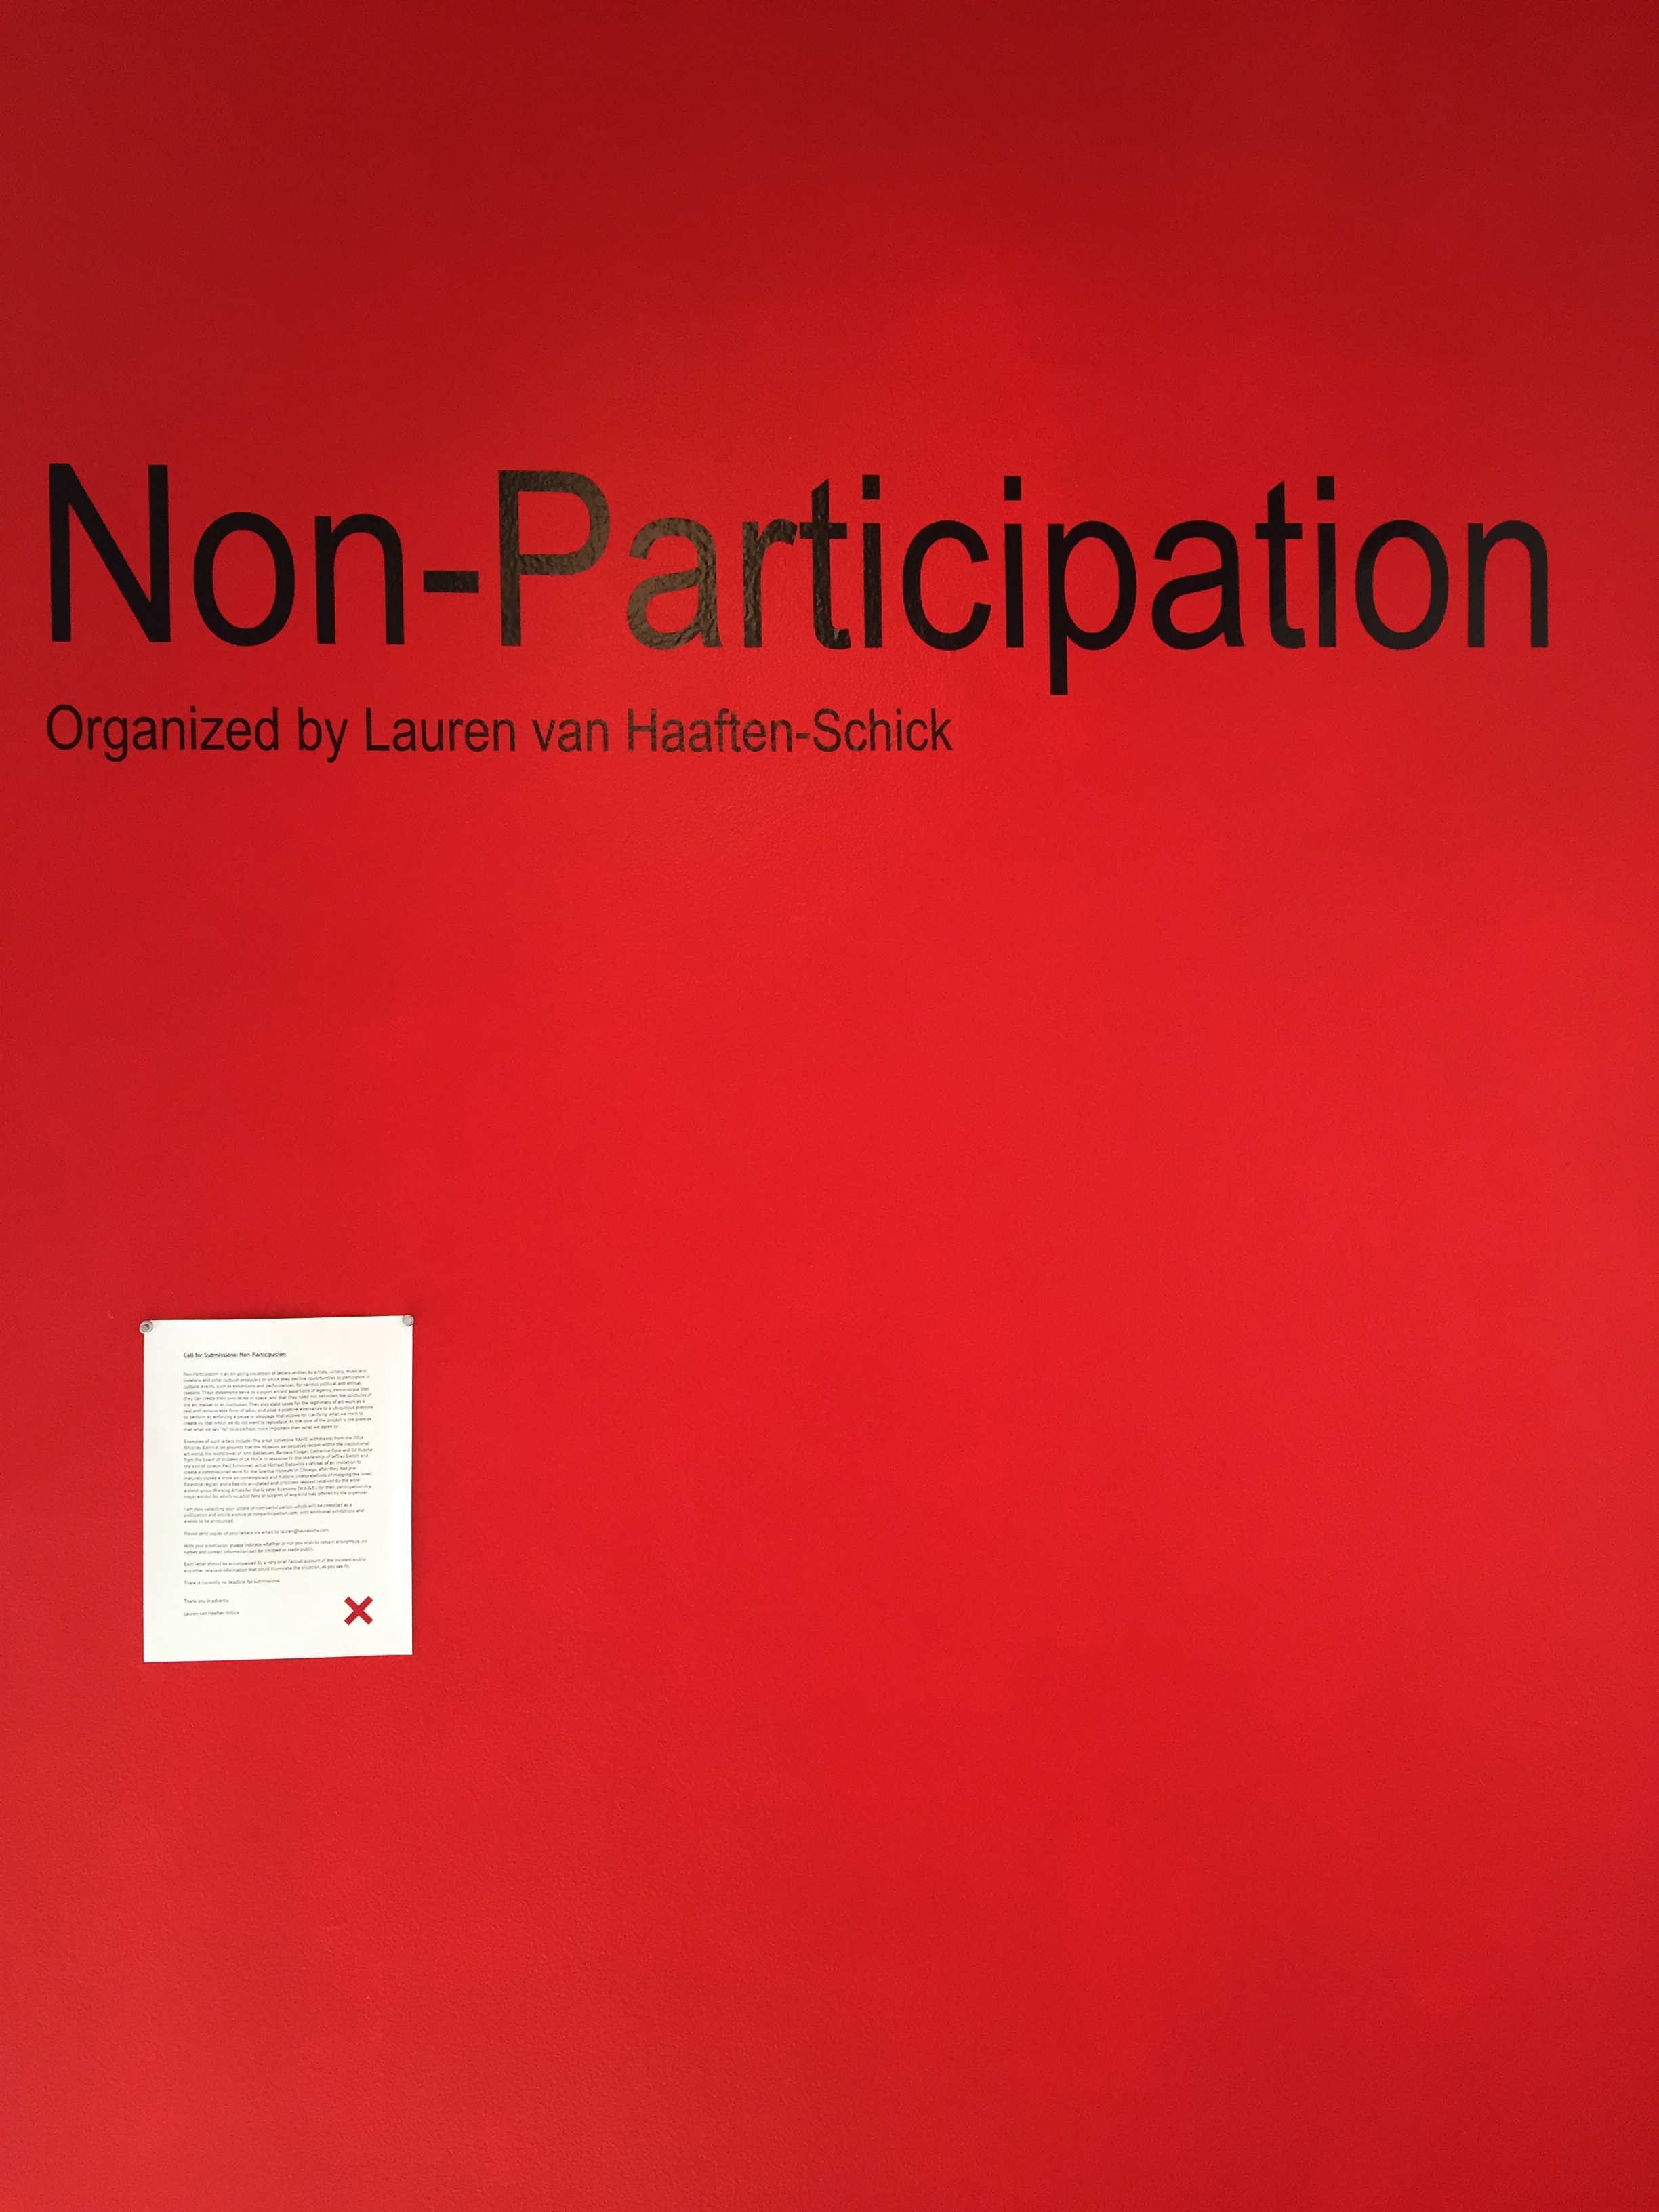 Non-Participation, Installation view, The Art League Houston